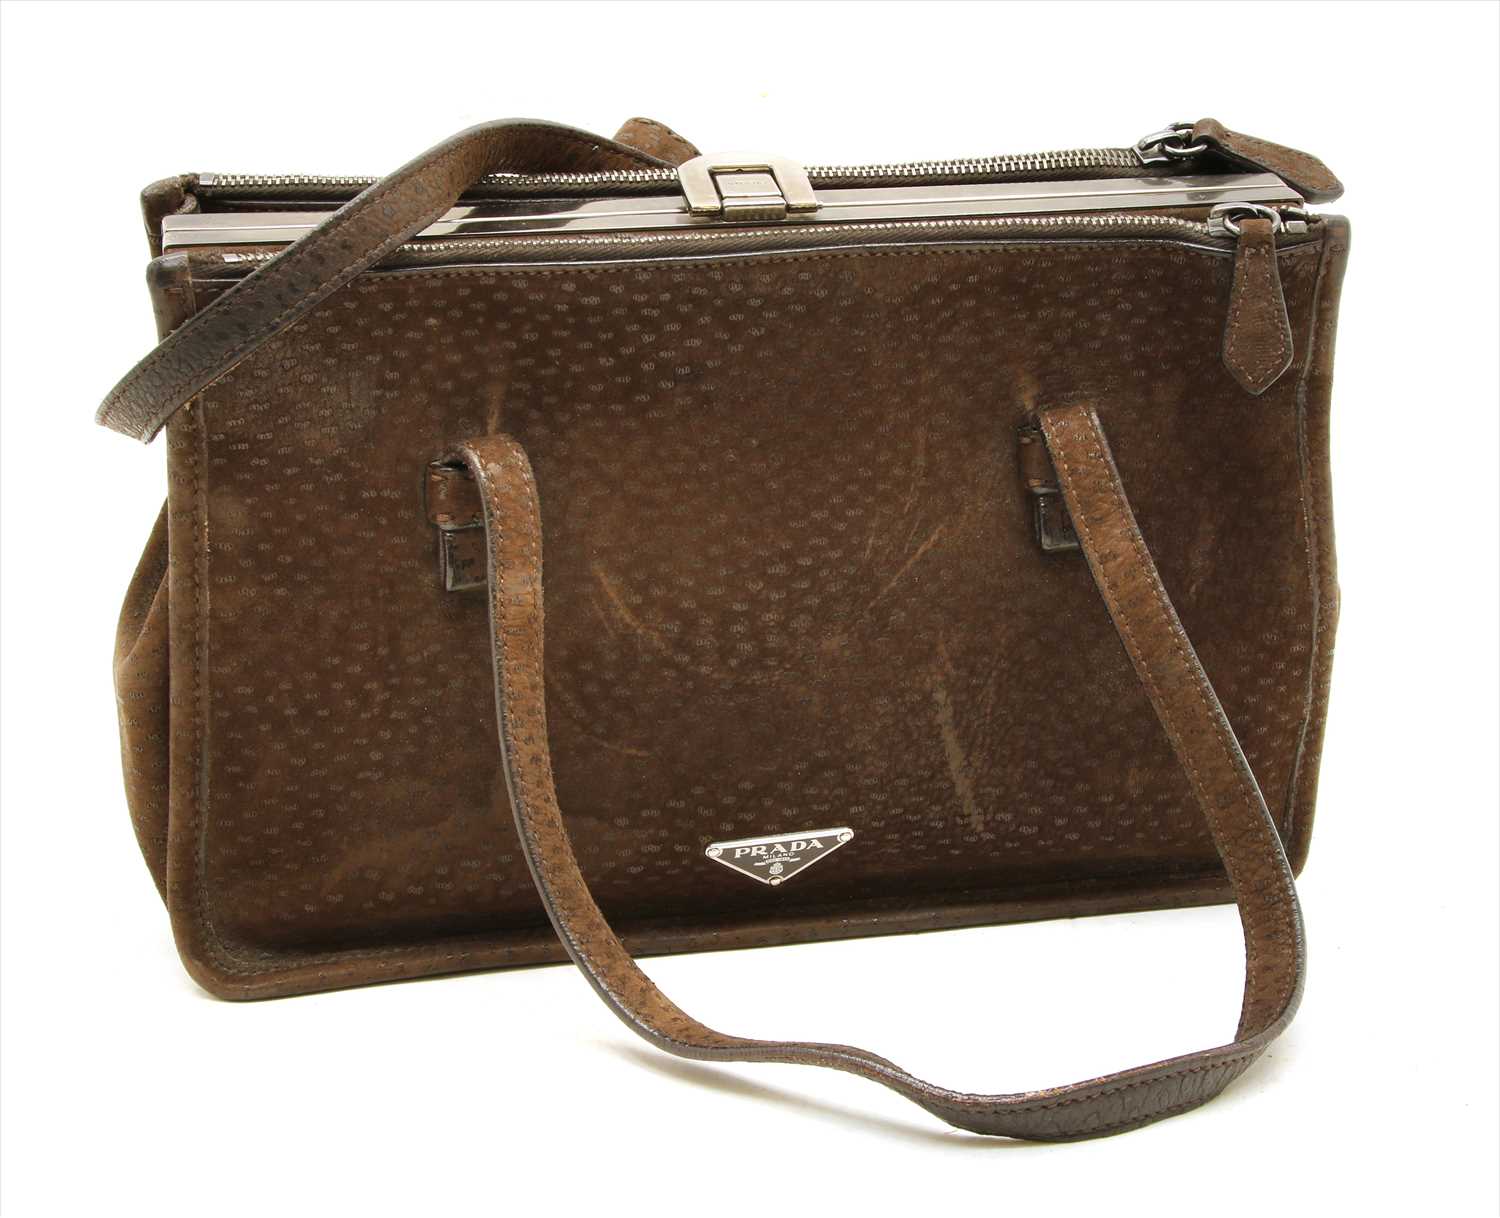 A Prada semitracolla brown suede bag - Image 2 of 2